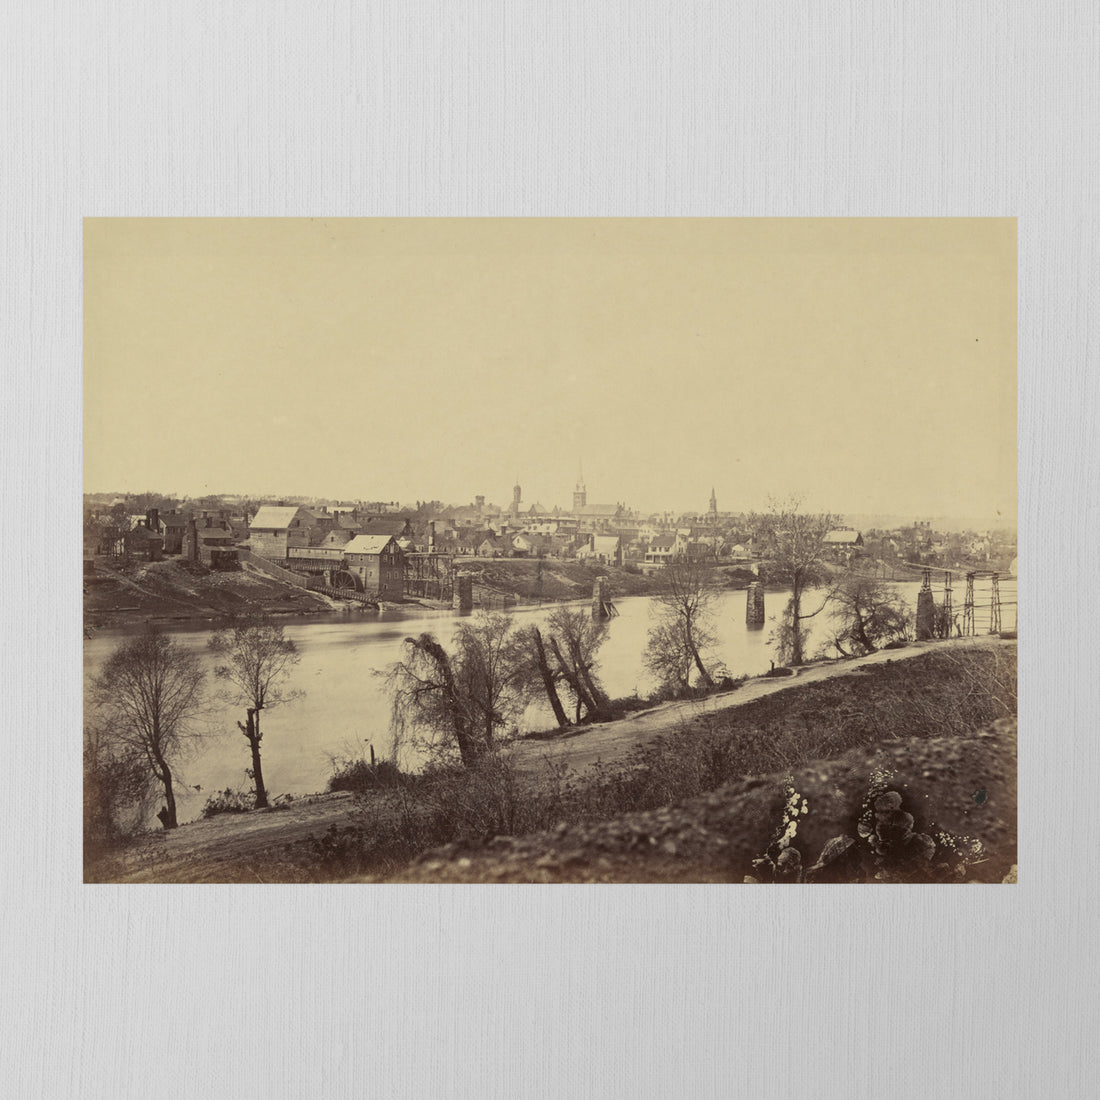 Fredericksburg, Virginia by Jordan J. Lloyd, 1863